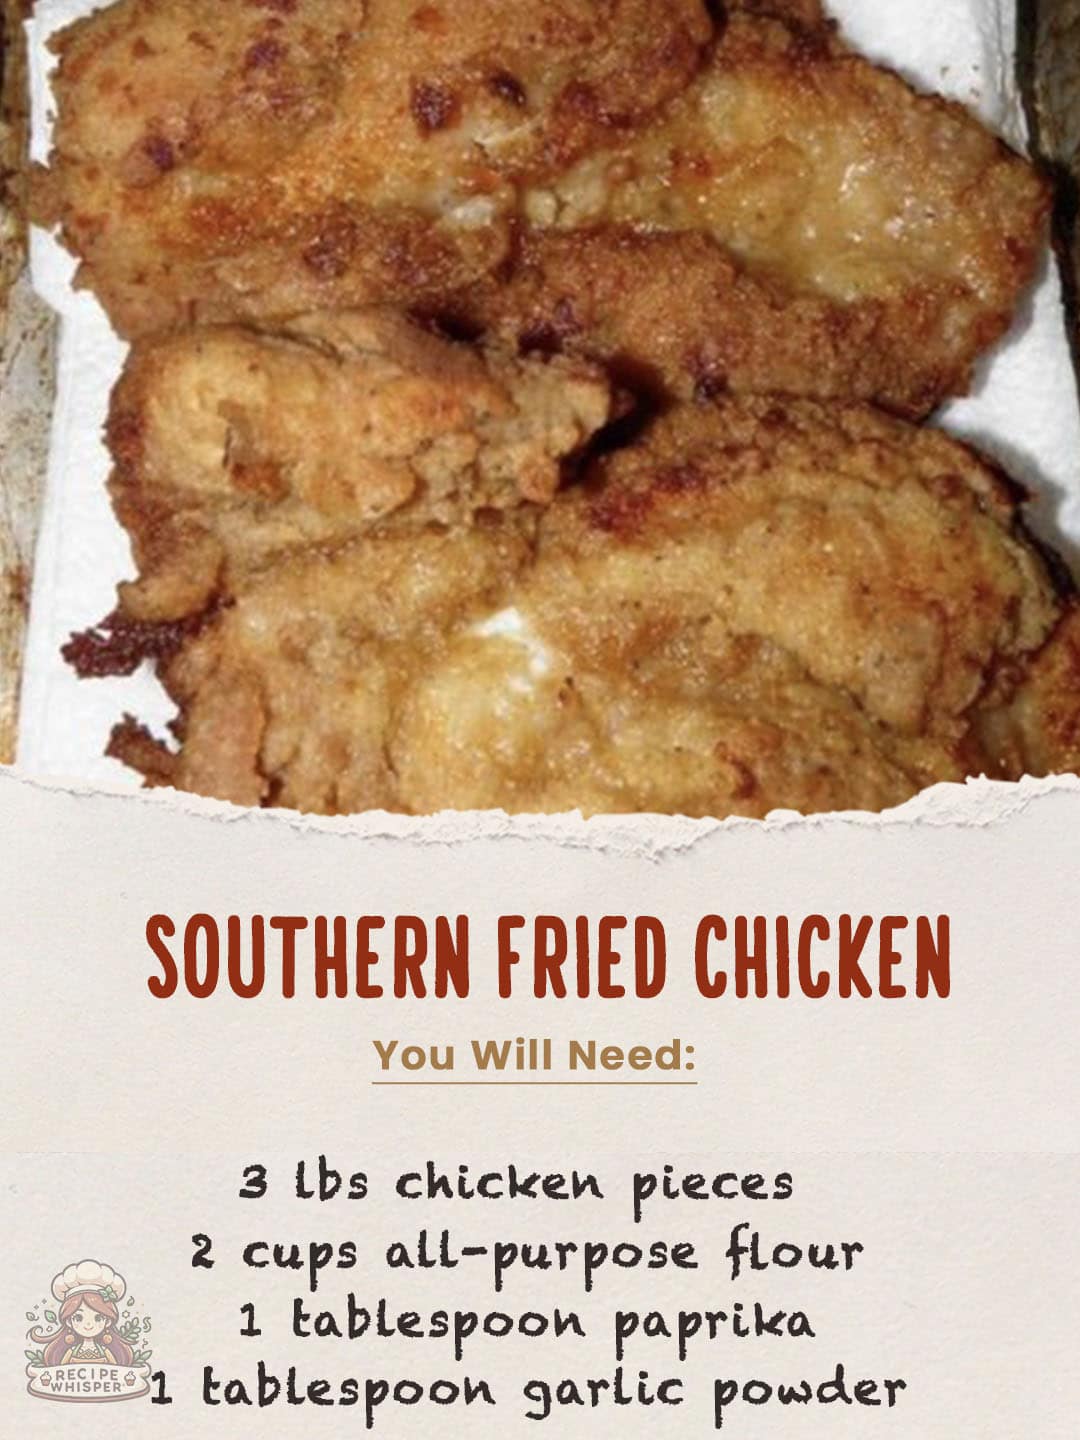 Southern Fried Chicken – Recipe Whisper